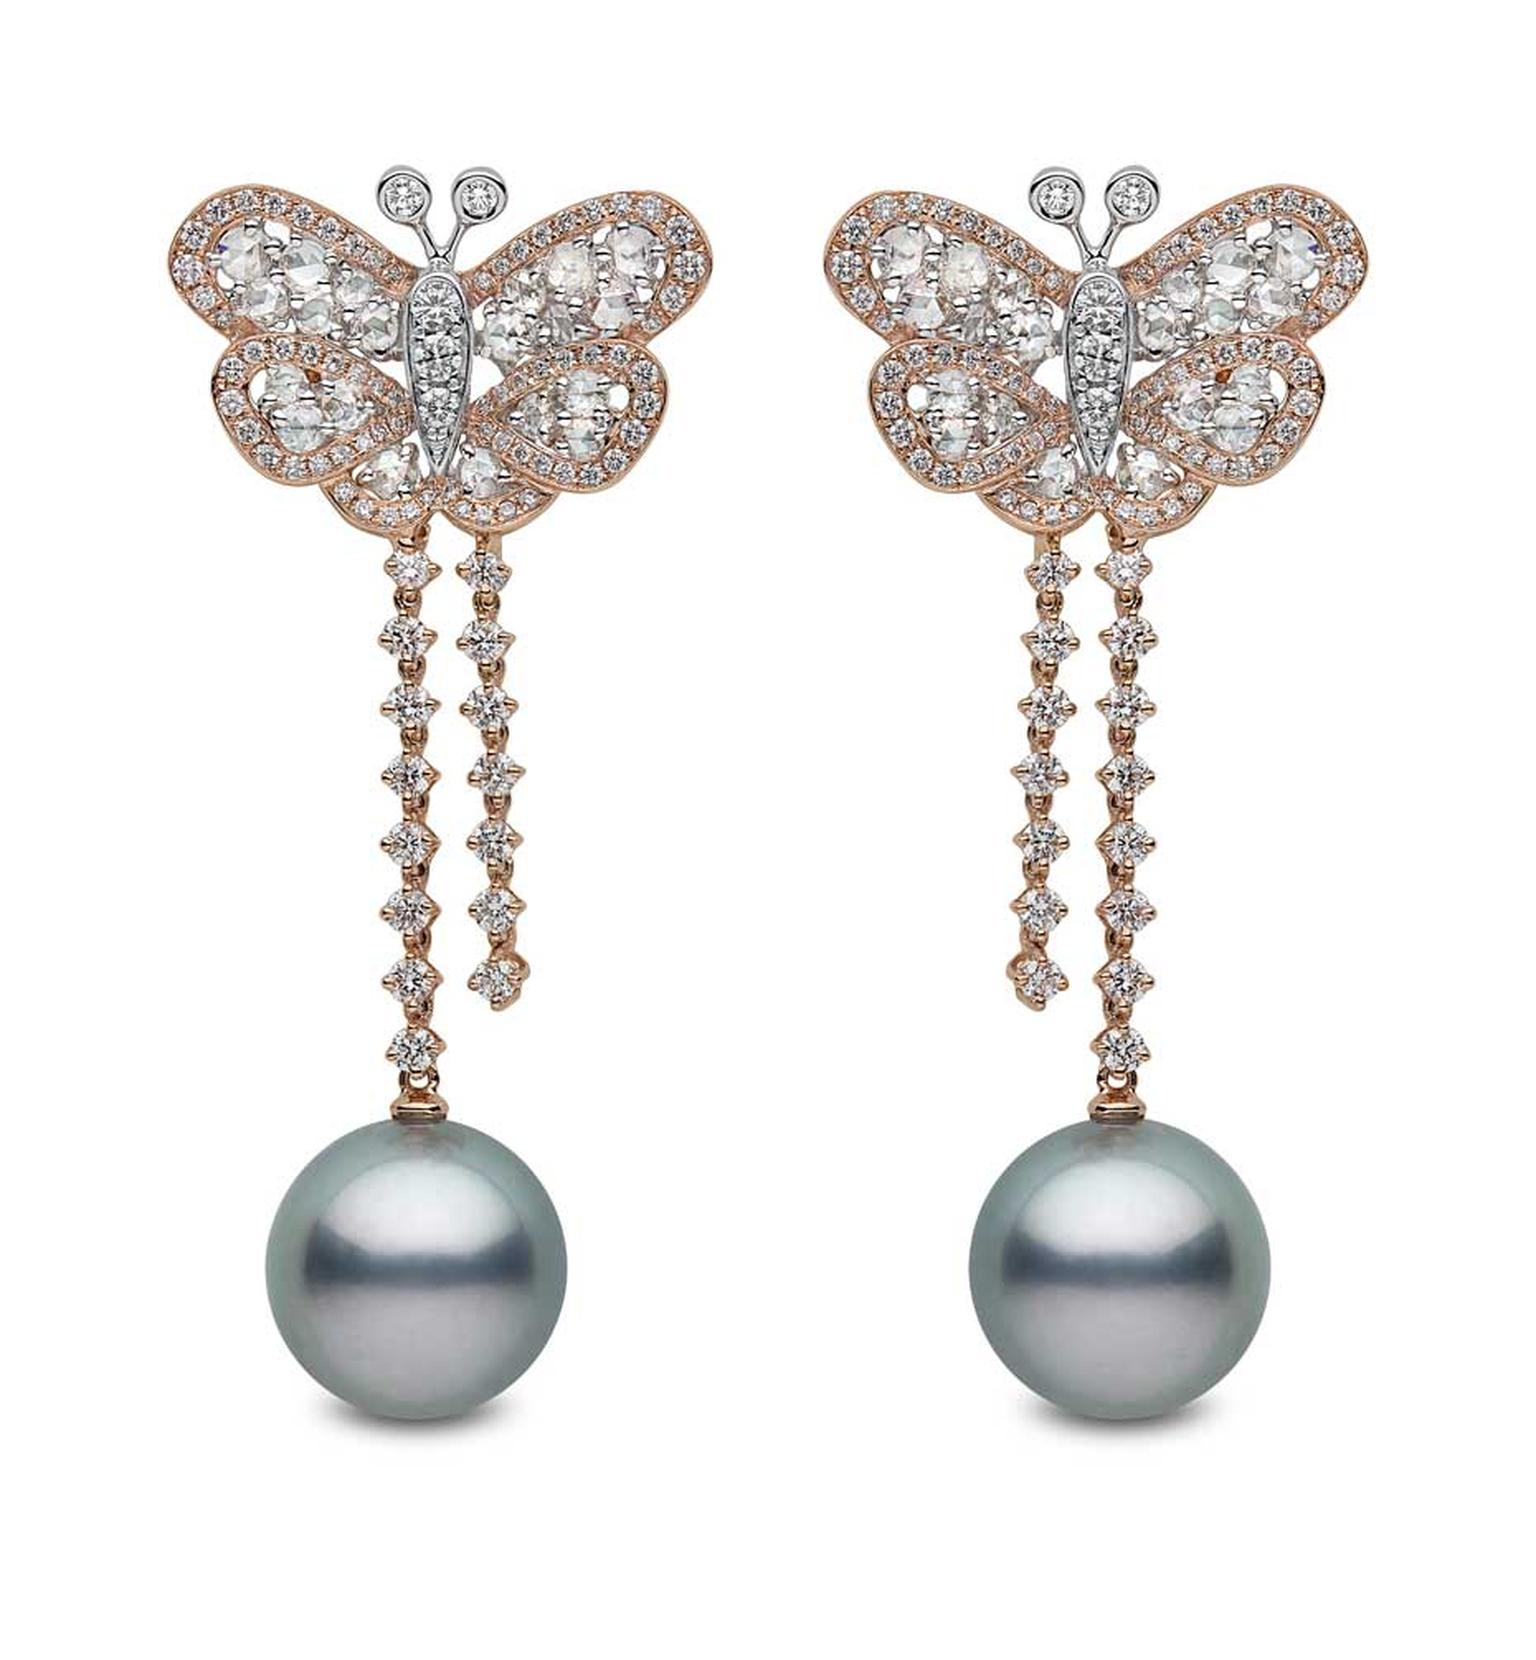 YOKO London rose gold earrings featuring diamonds and 14mm-15mm Tahitian pearls.